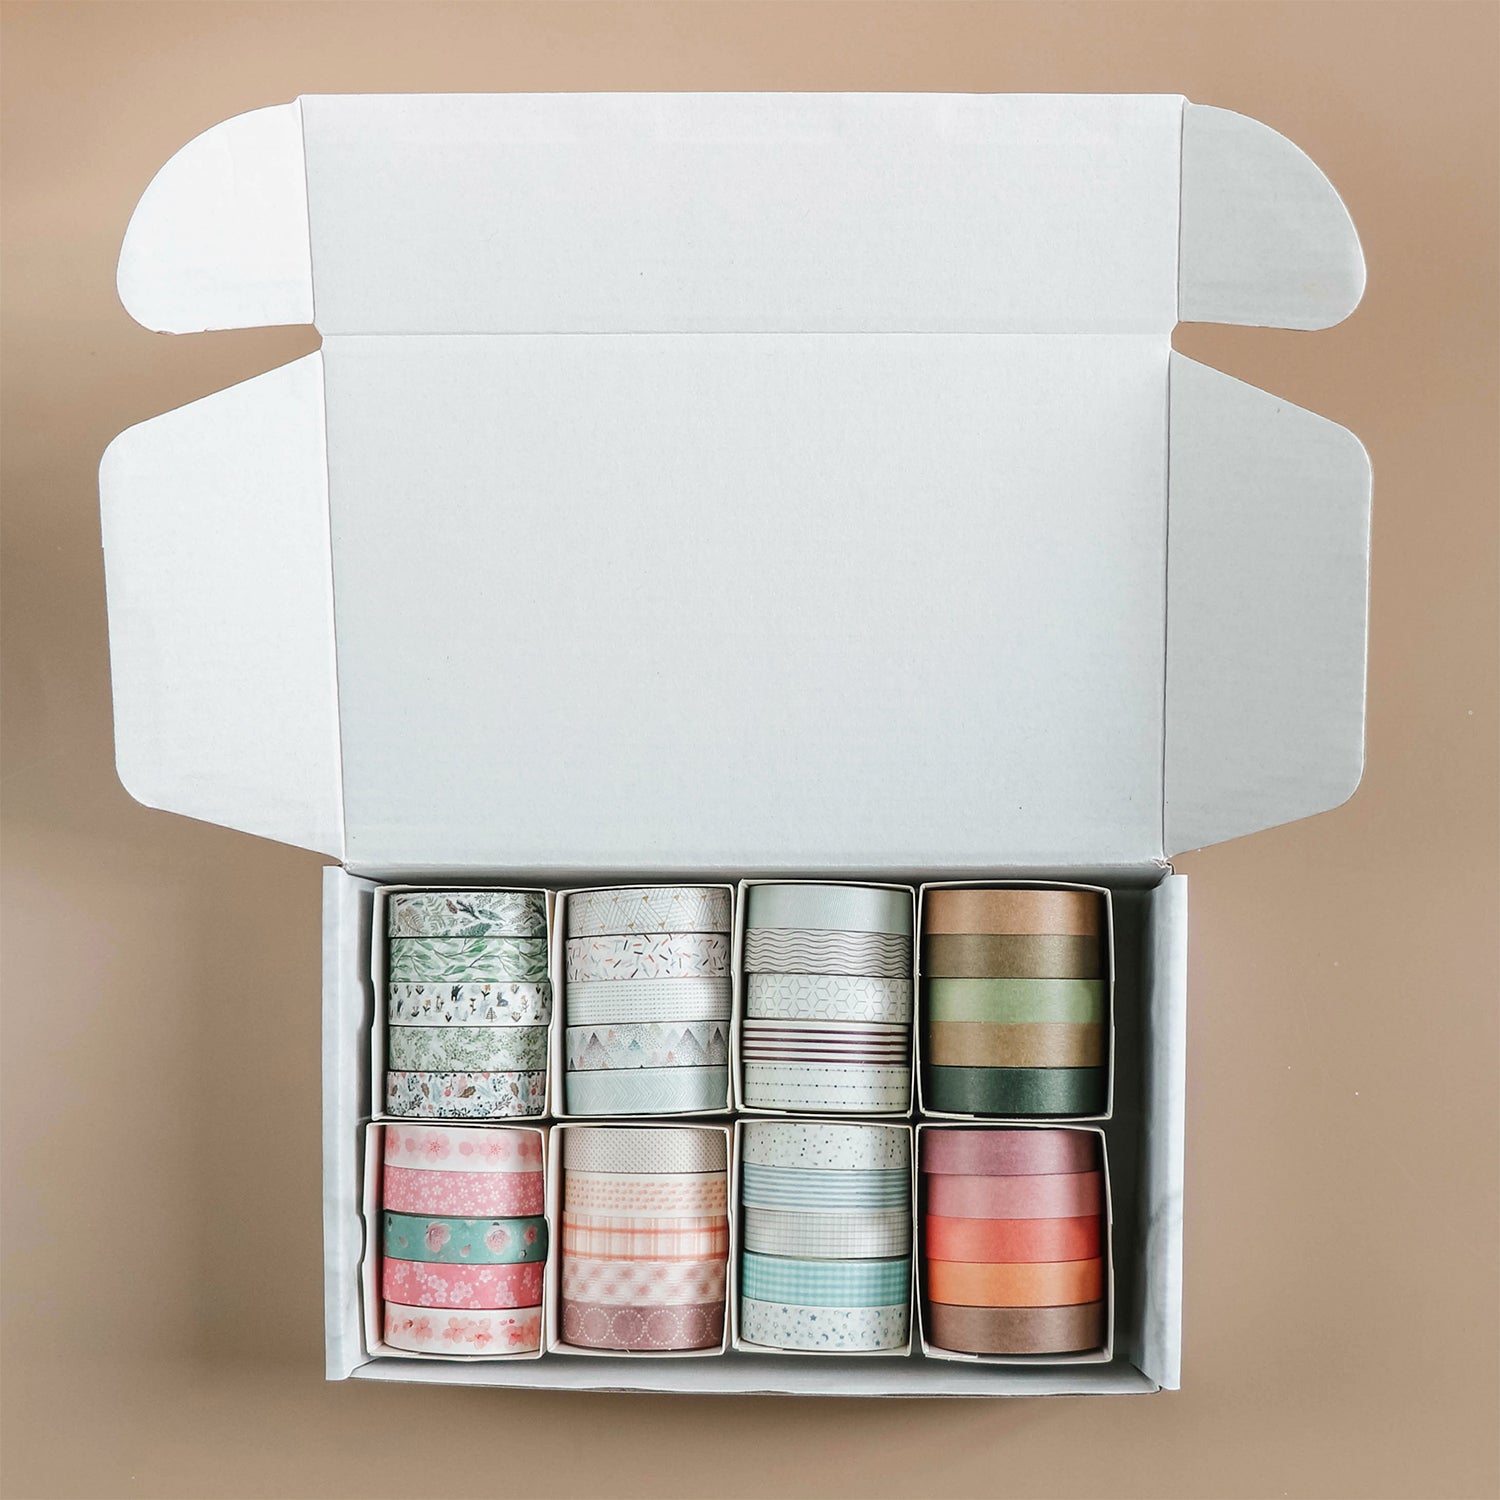 Knaid 40 Rolls of Slim Washi Tape Gift Box Set Decorative Paper